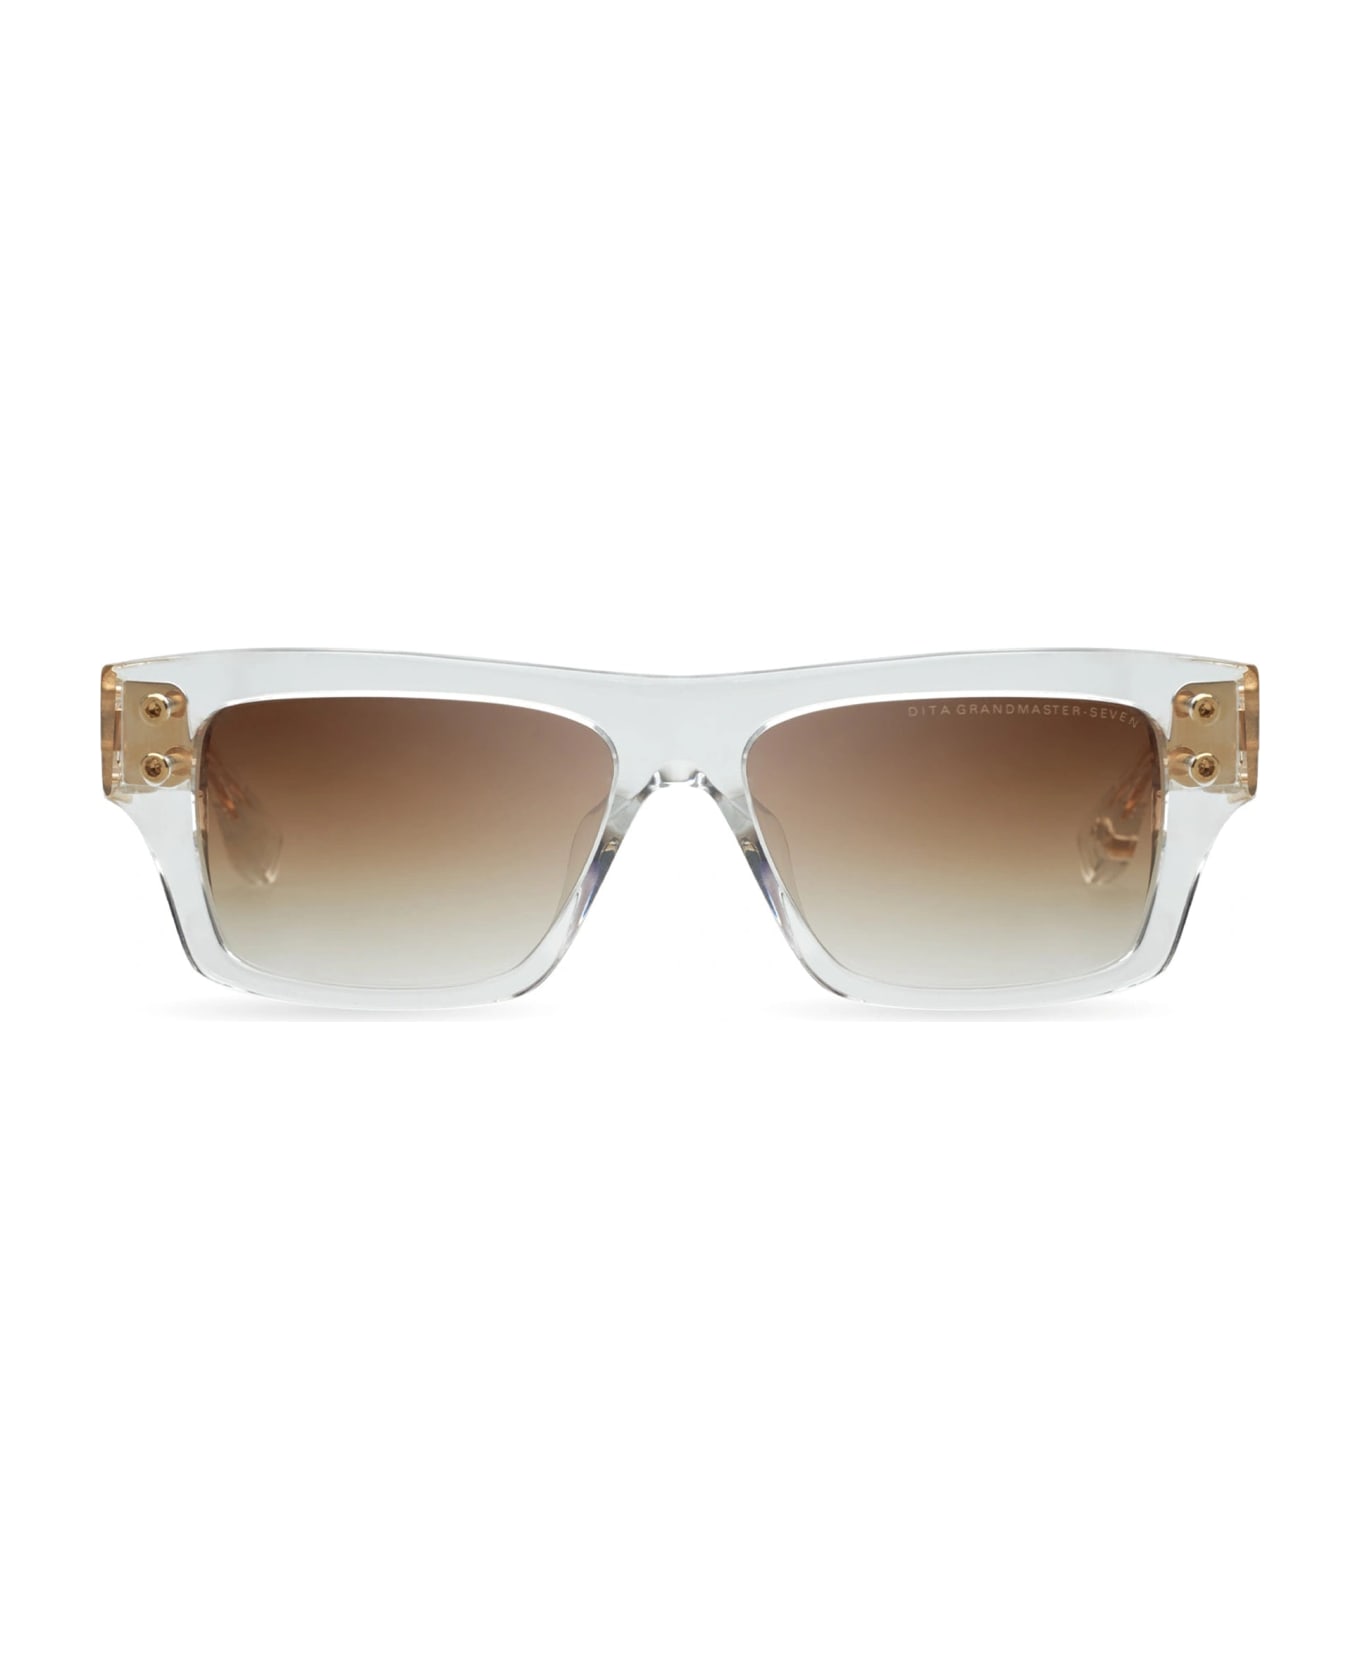 Dita Grandmaster Seven - Crystal / Gold Sunglasses - transparent/gold